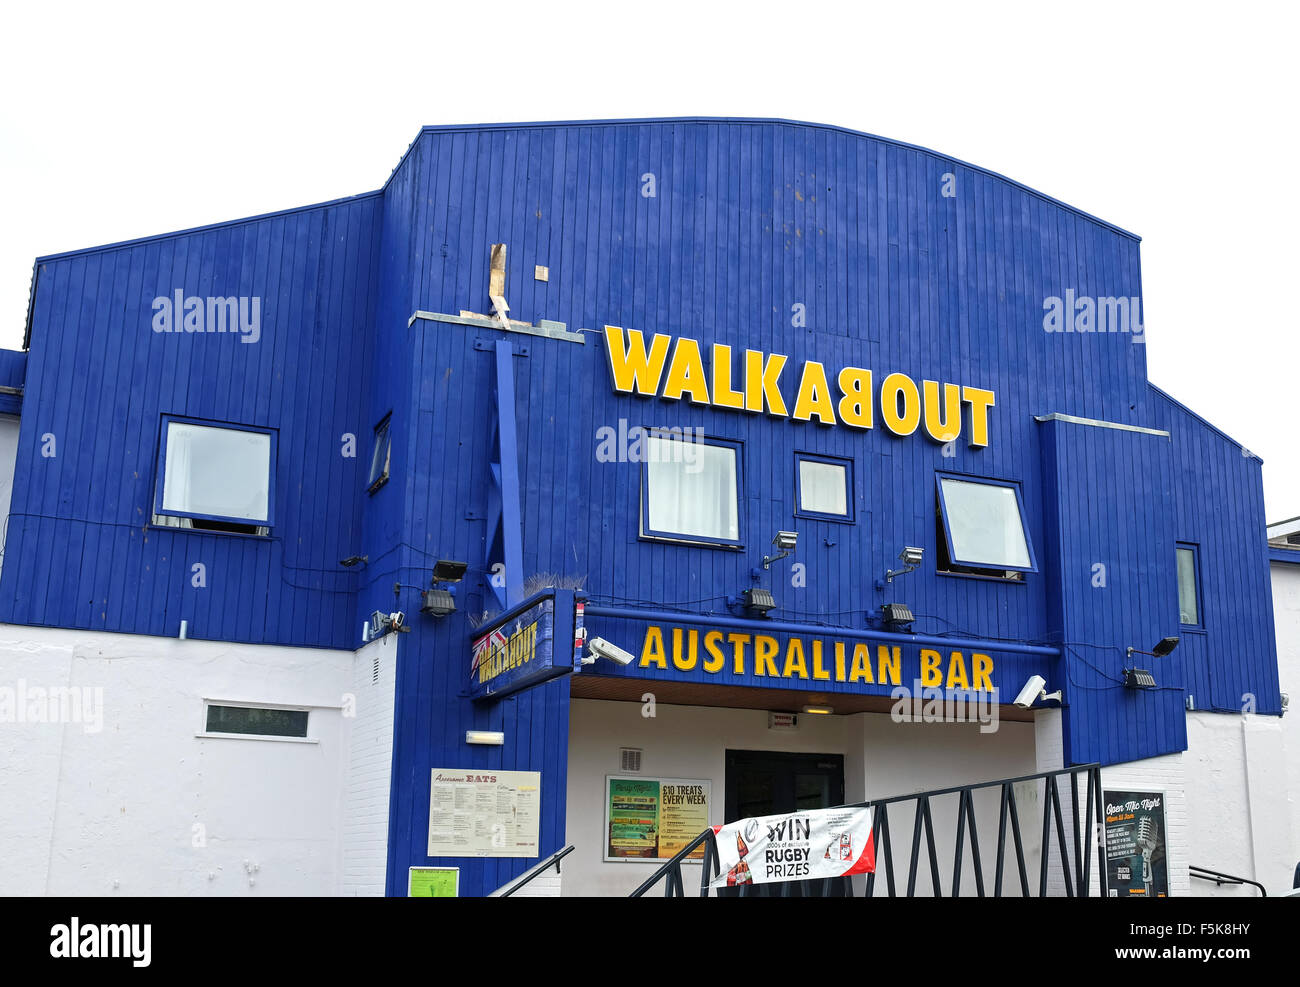 The Walkabout Australian bar in Newquay, Cornwall, UK Stock Photo